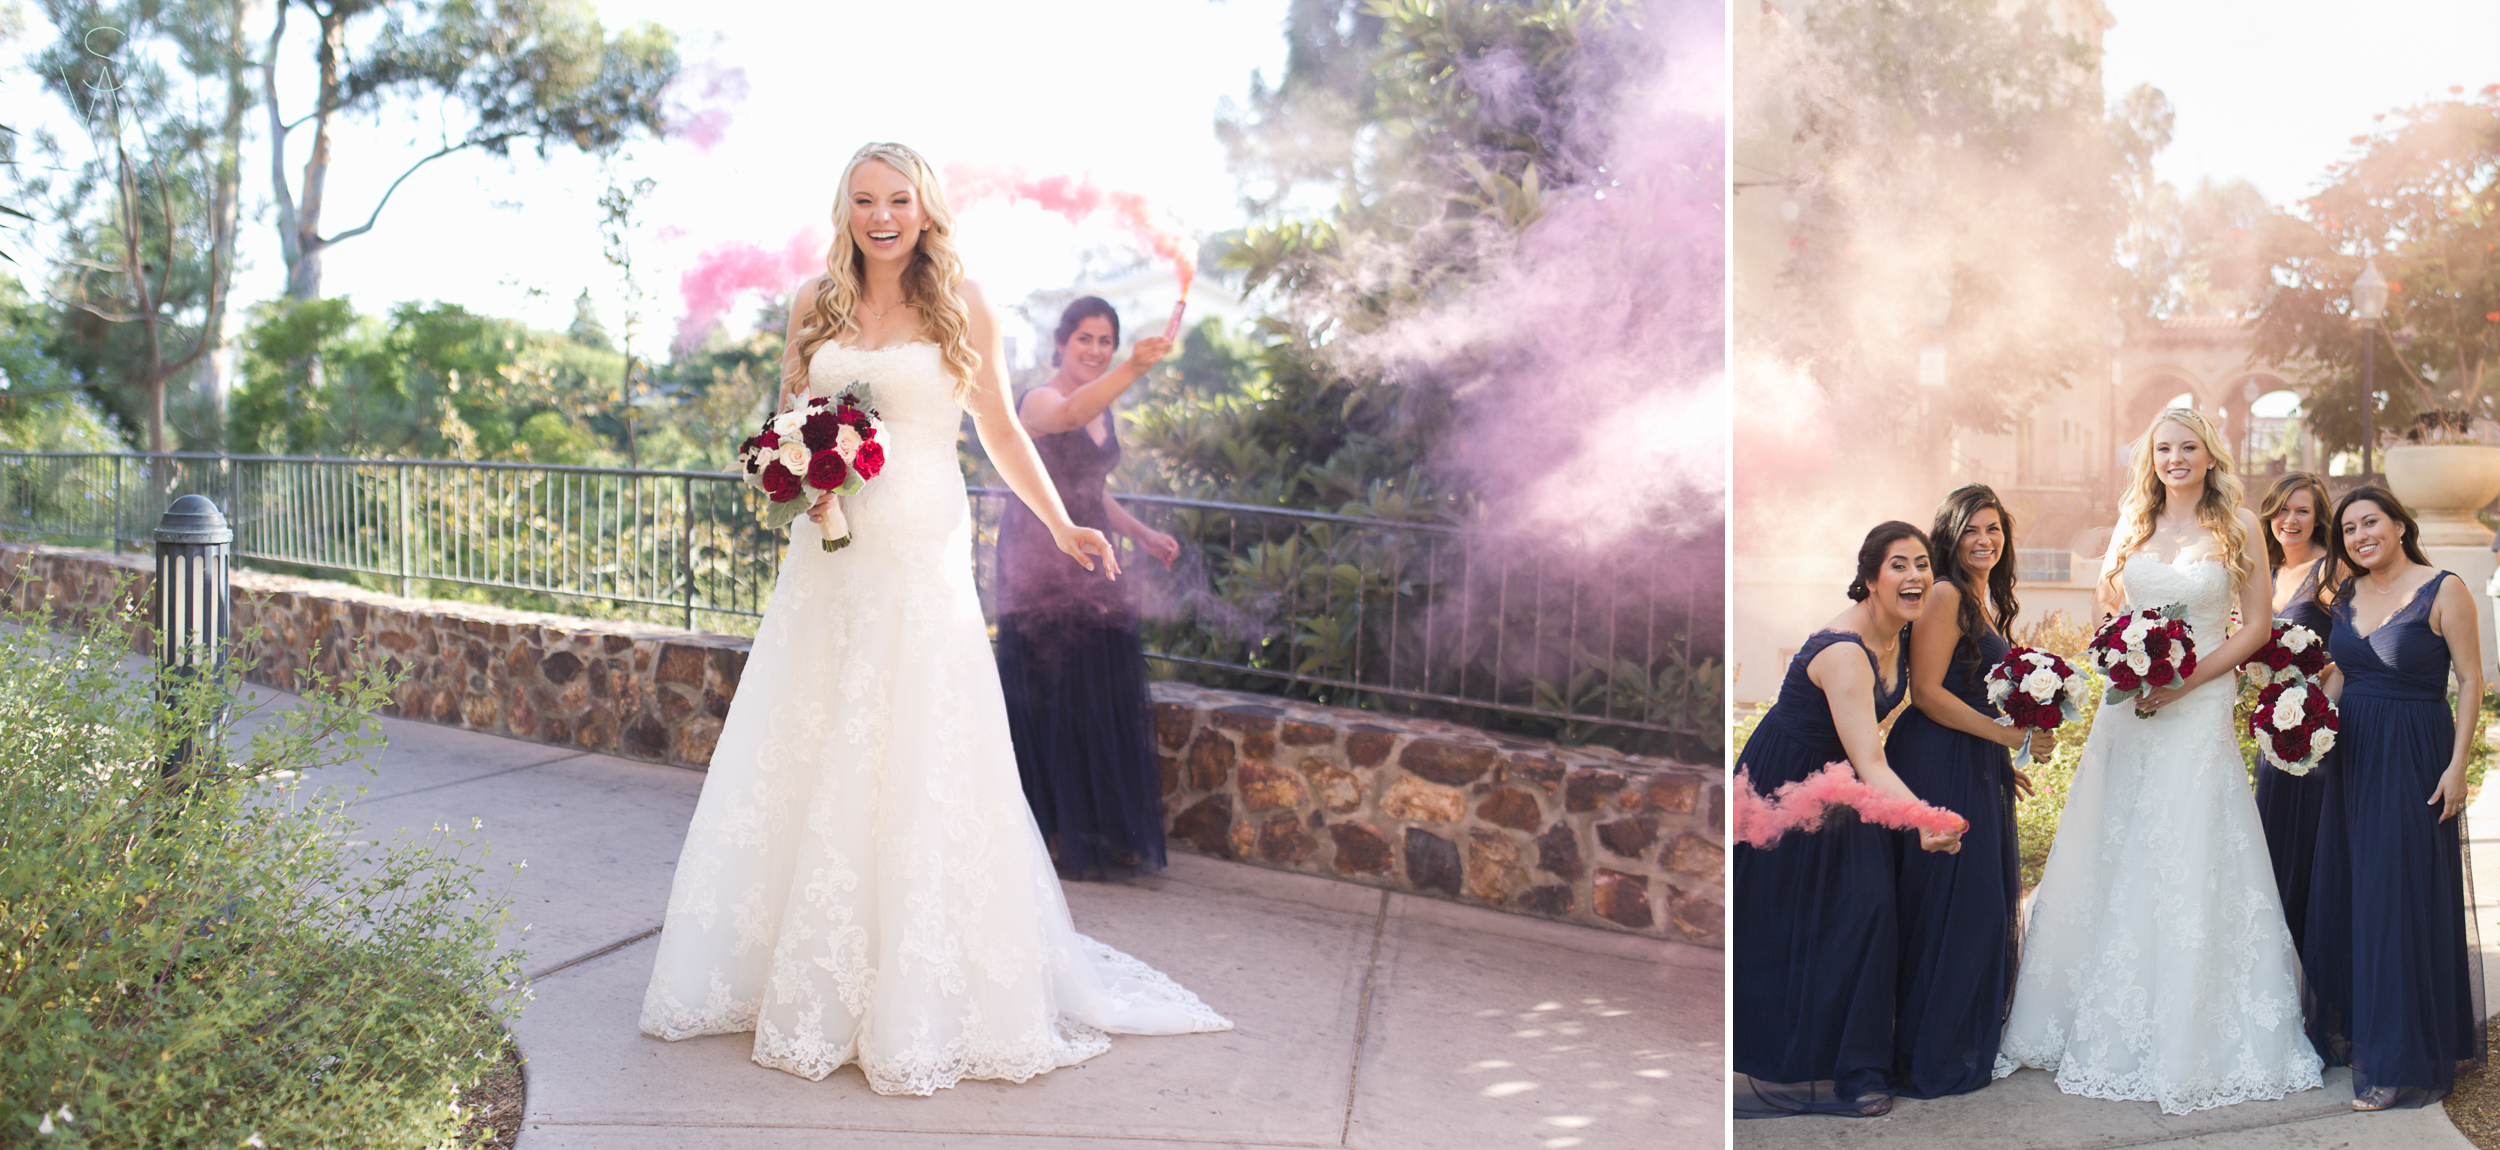 124Prado.smoke.bomb.weddings.shewanders.photography-.jpg